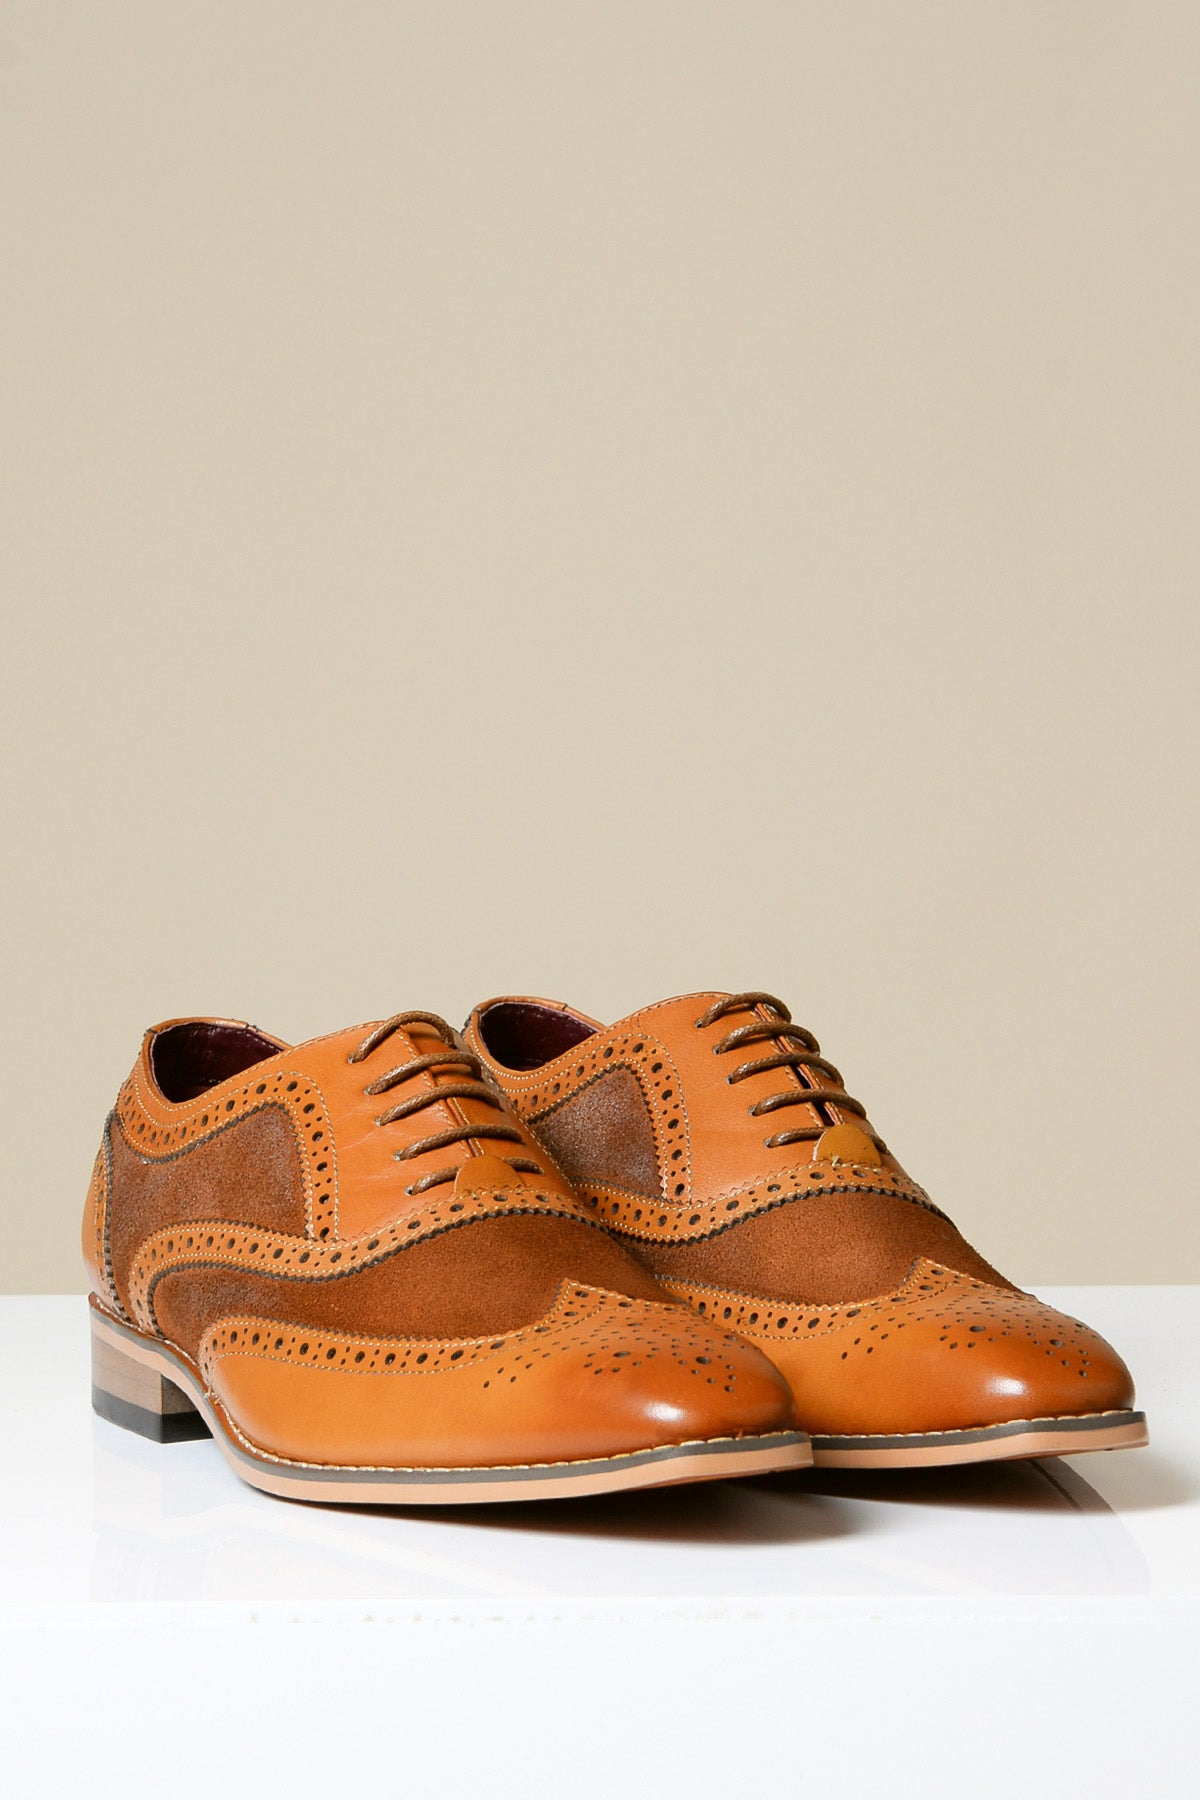 BRADLEY - Tan Leather Suede Contrast Brogue Shoe